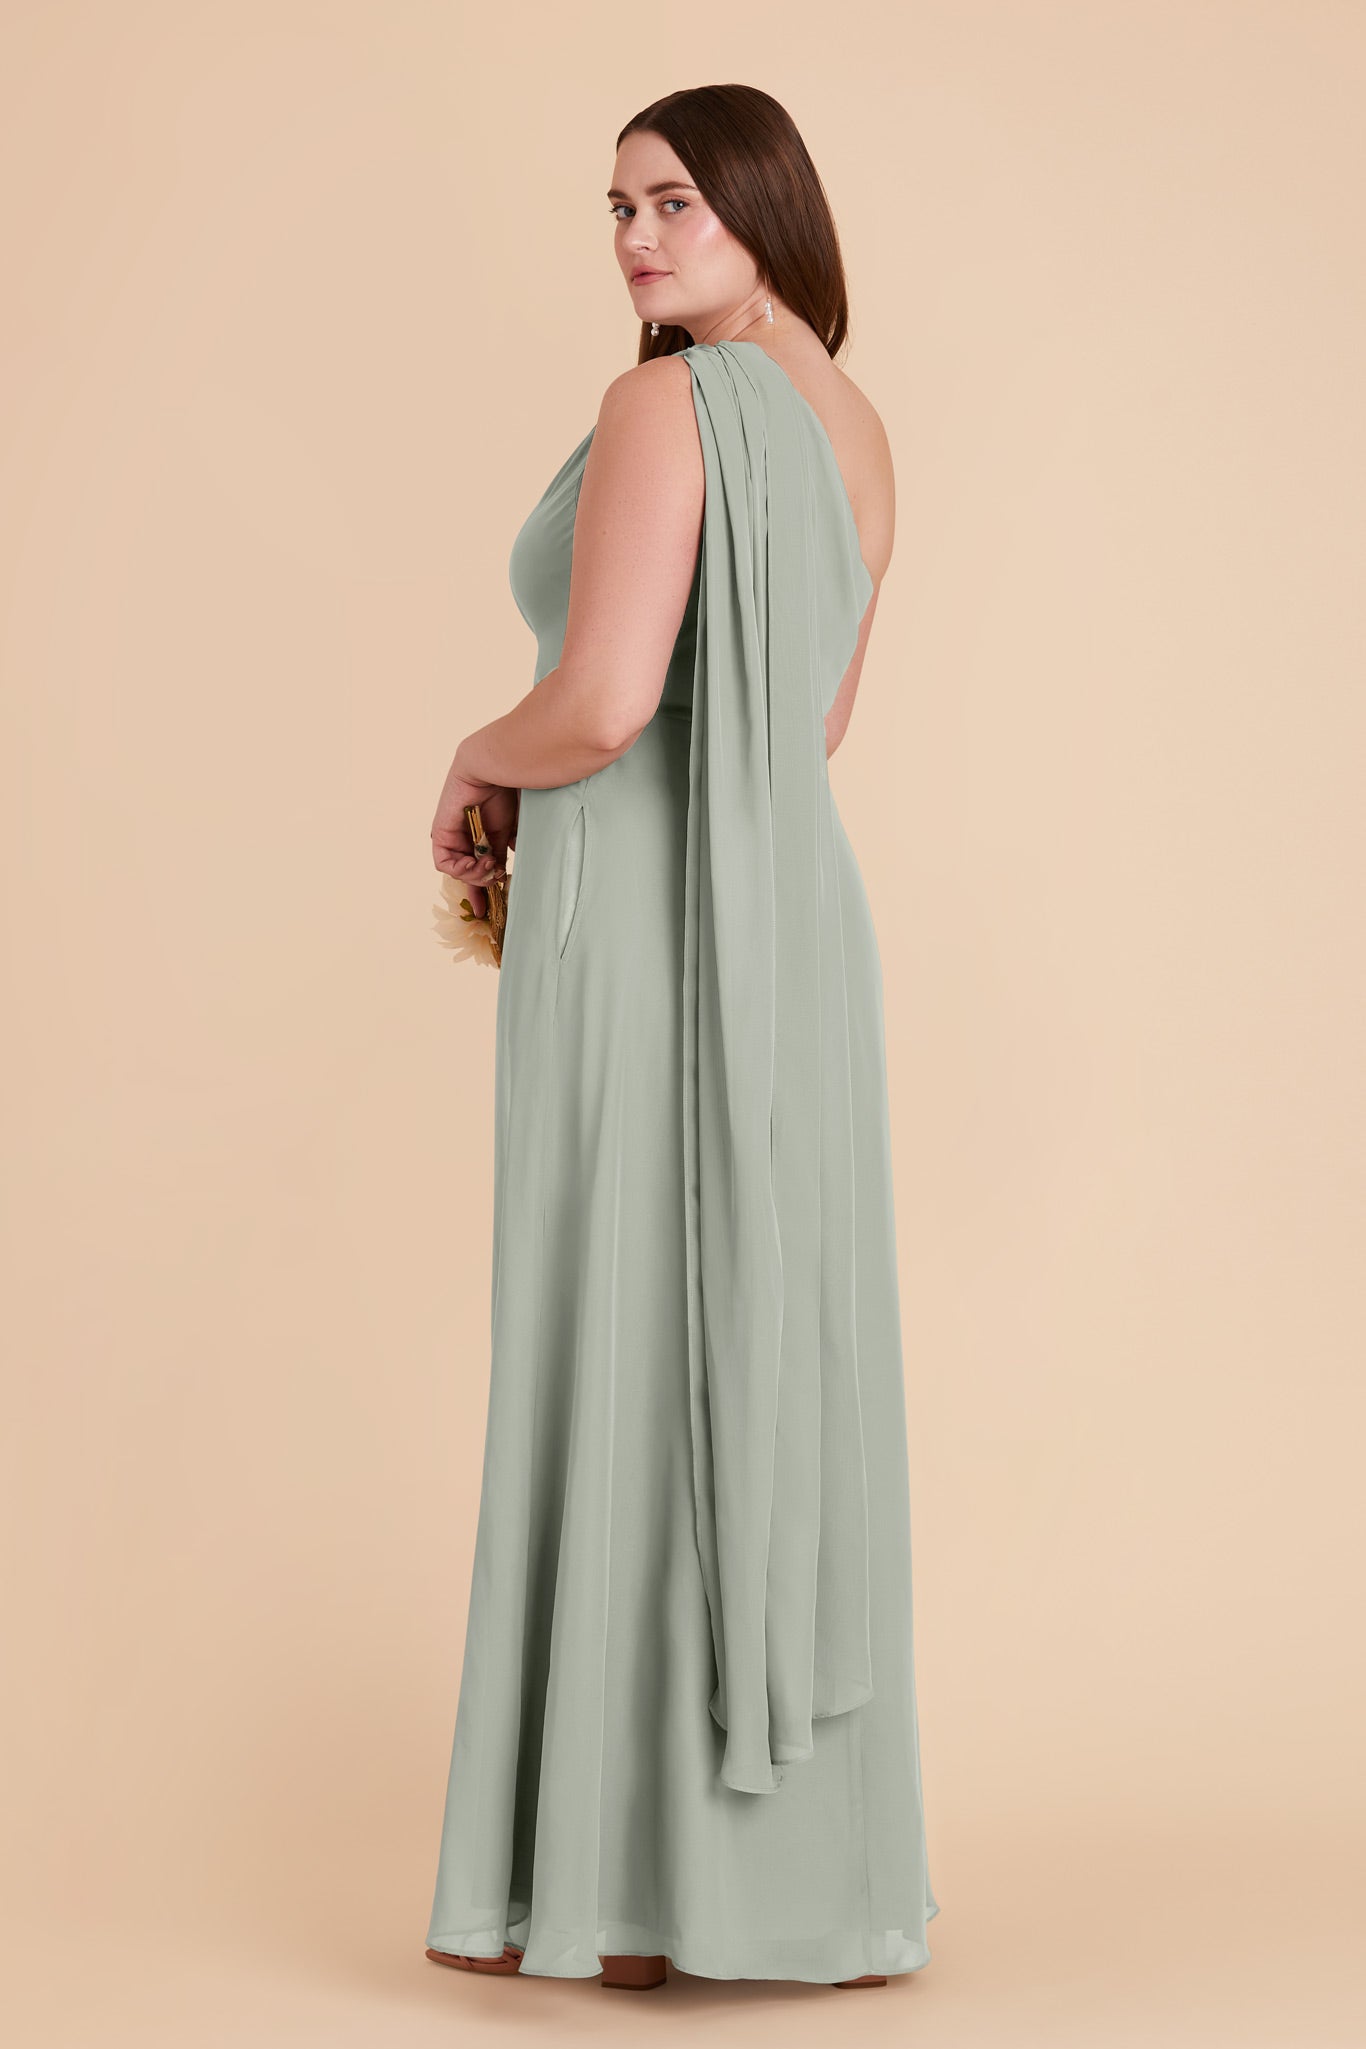 Sage Melissa Chiffon Dress by Birdy Grey